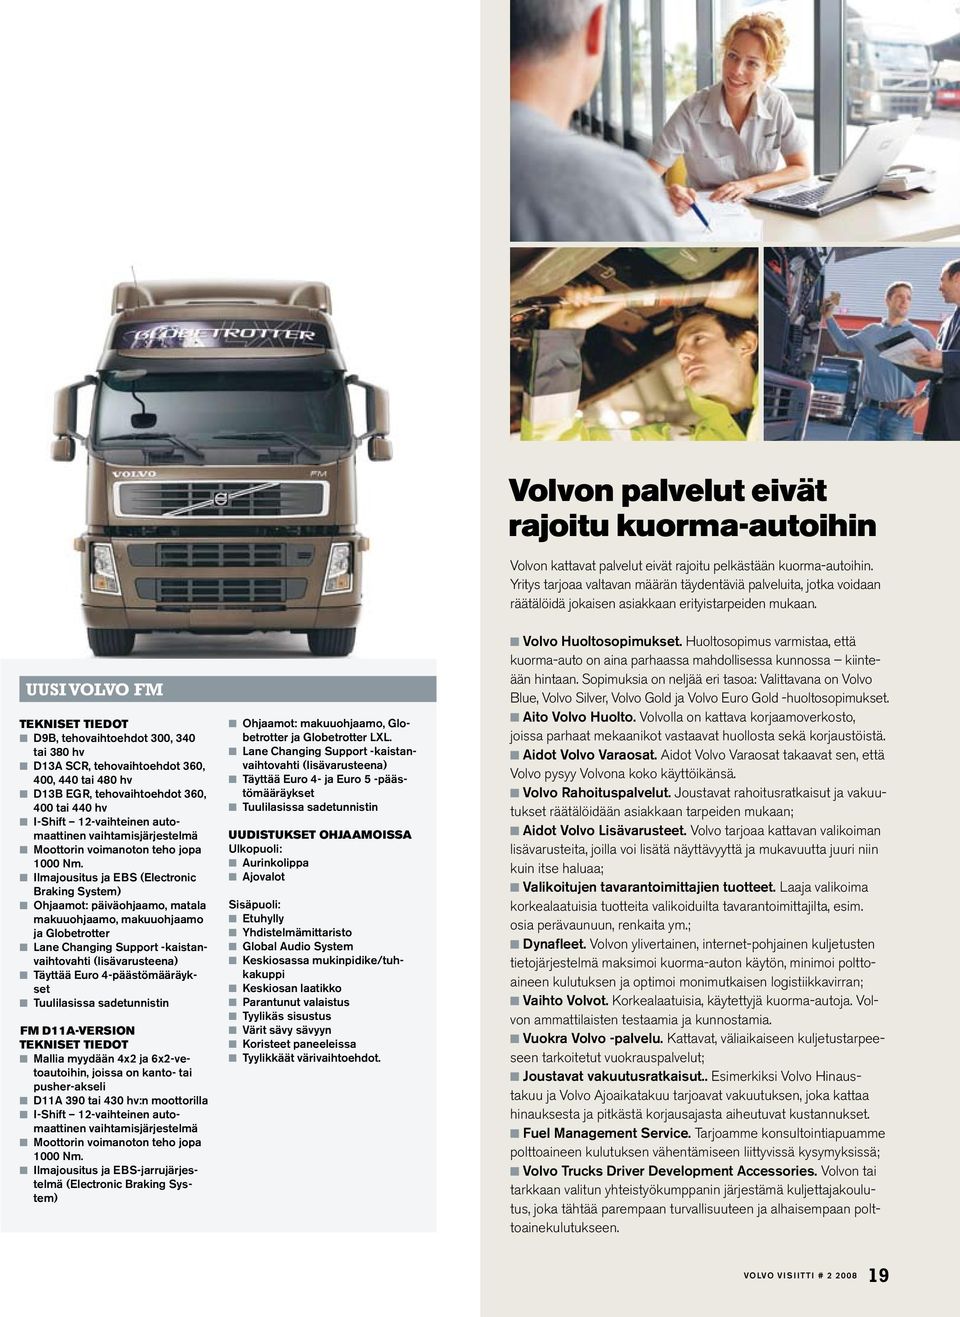 Uusi Volvo FM tekniset tiedot n D9B, tehovaihtoehdot 300, 340 tai 380 hv n D13A SCR, tehovaihtoehdot 360, 400, 440 tai 480 hv n D13B EGR, tehovaihtoehdot 360, 400 tai 440 hv n I-Shift 12-vaihteinen